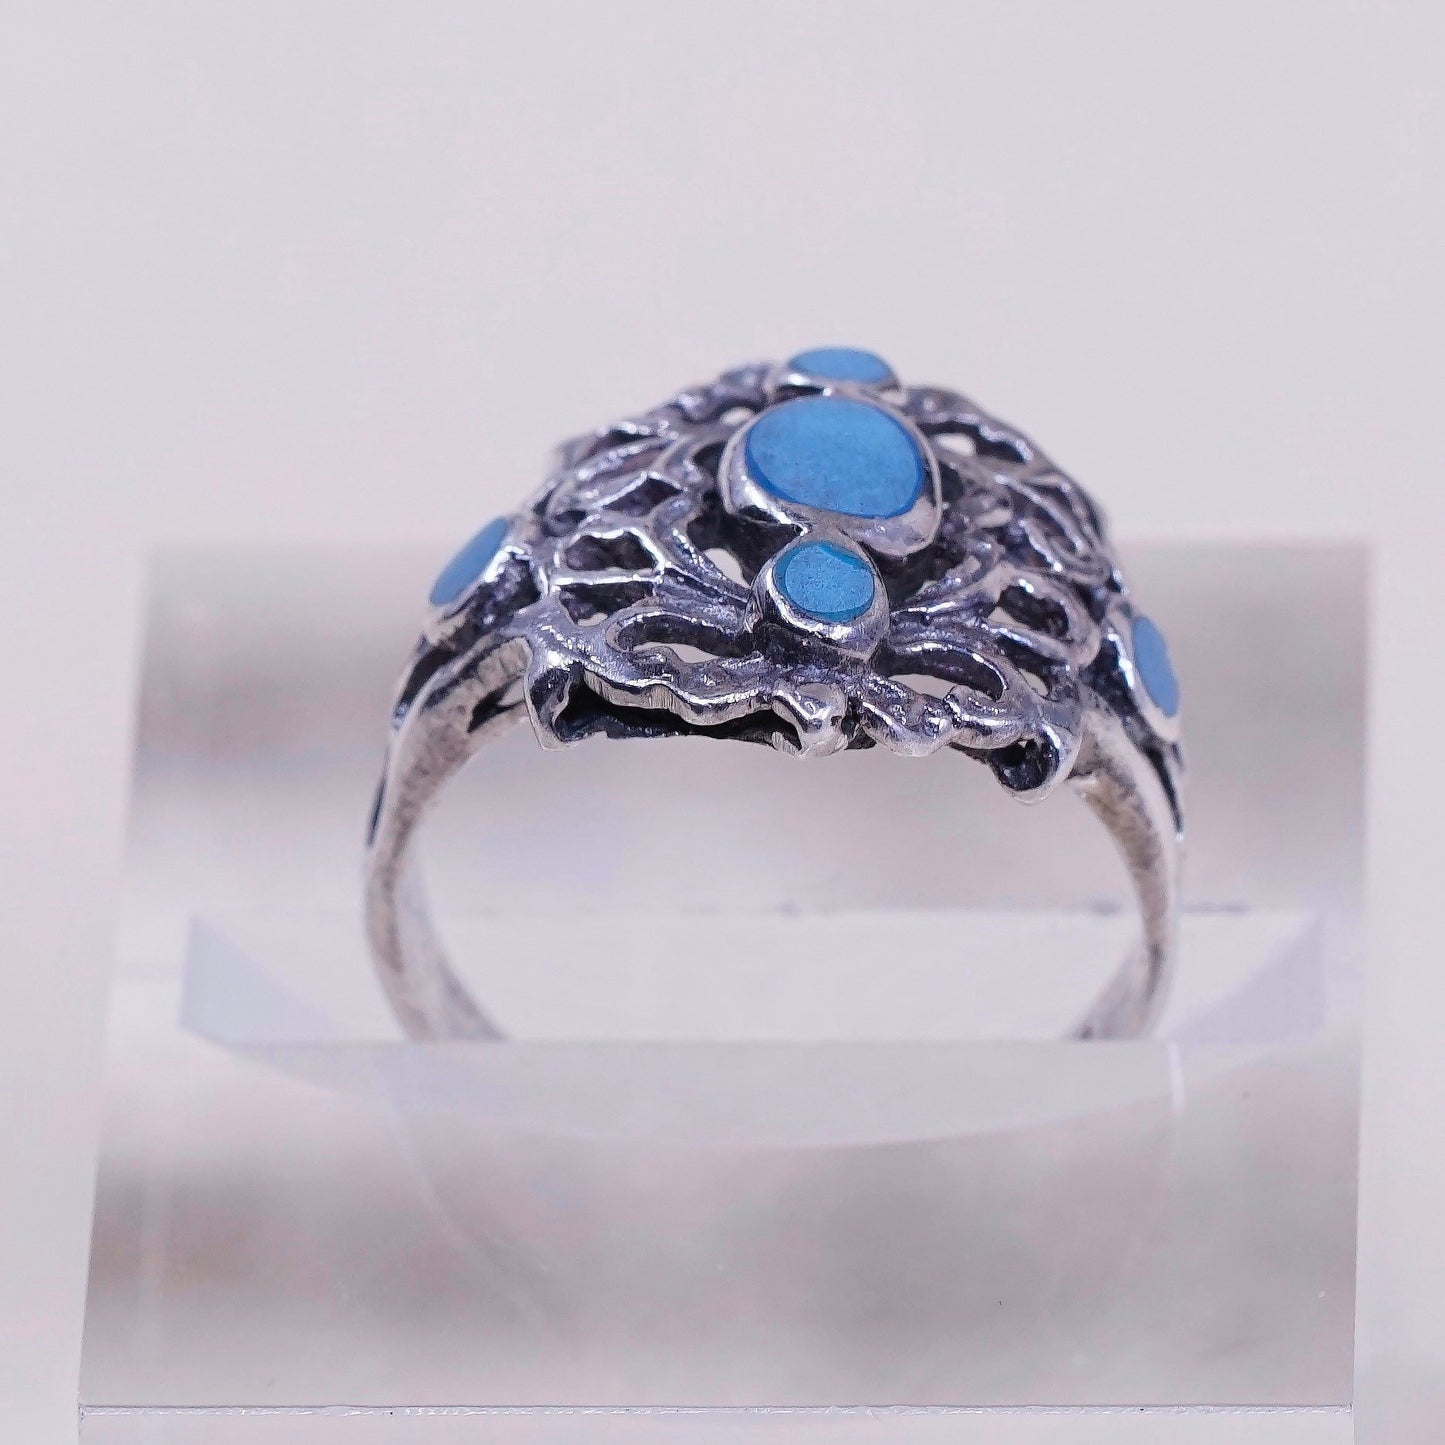 Size 6.25, vtg sterling 925 silver handmade ring w/ turquoise, southwestern